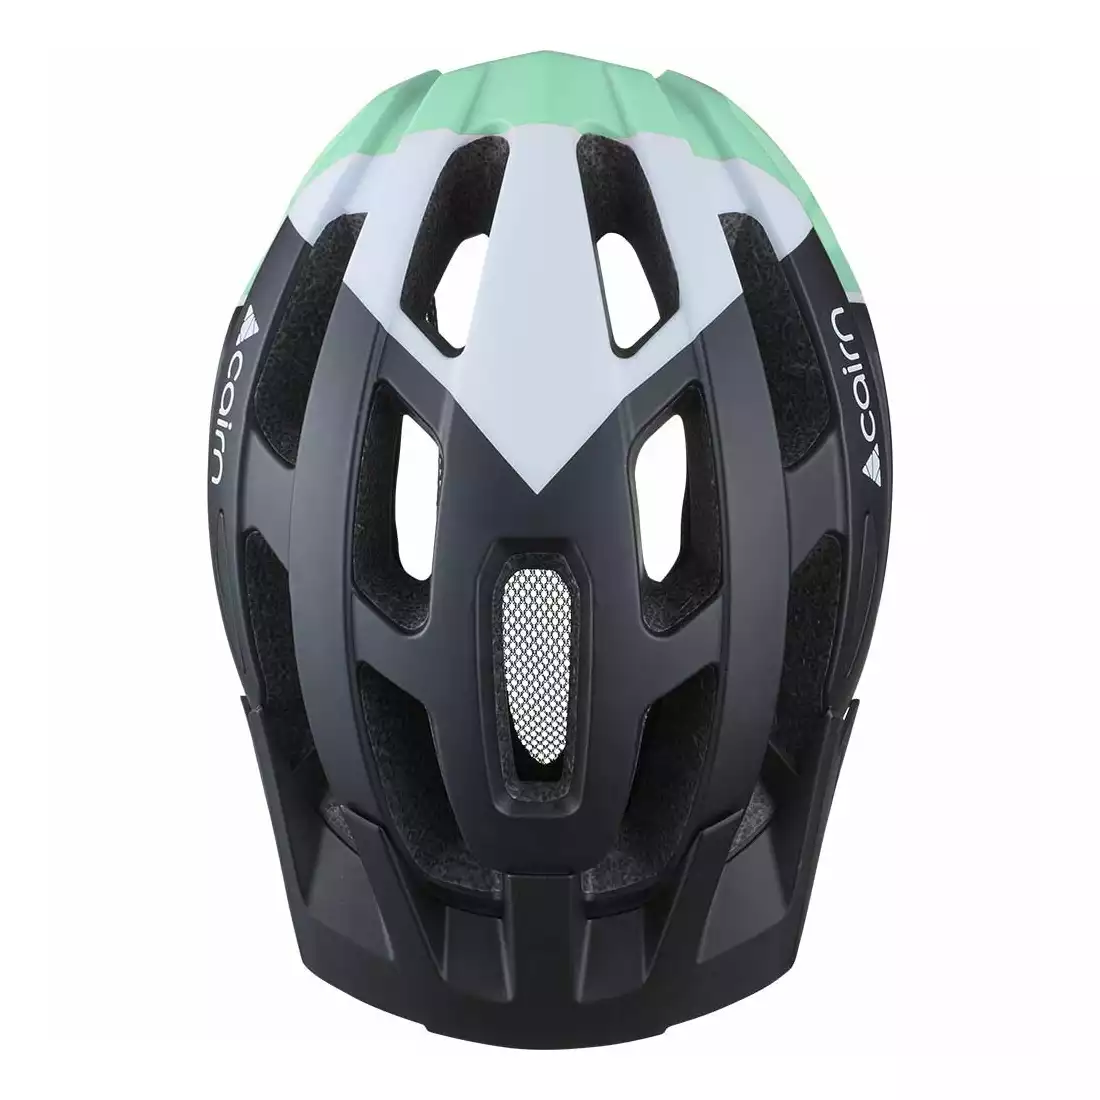 CAIRN PRISM XTR II cyklistická helma, černo-tyrkysová